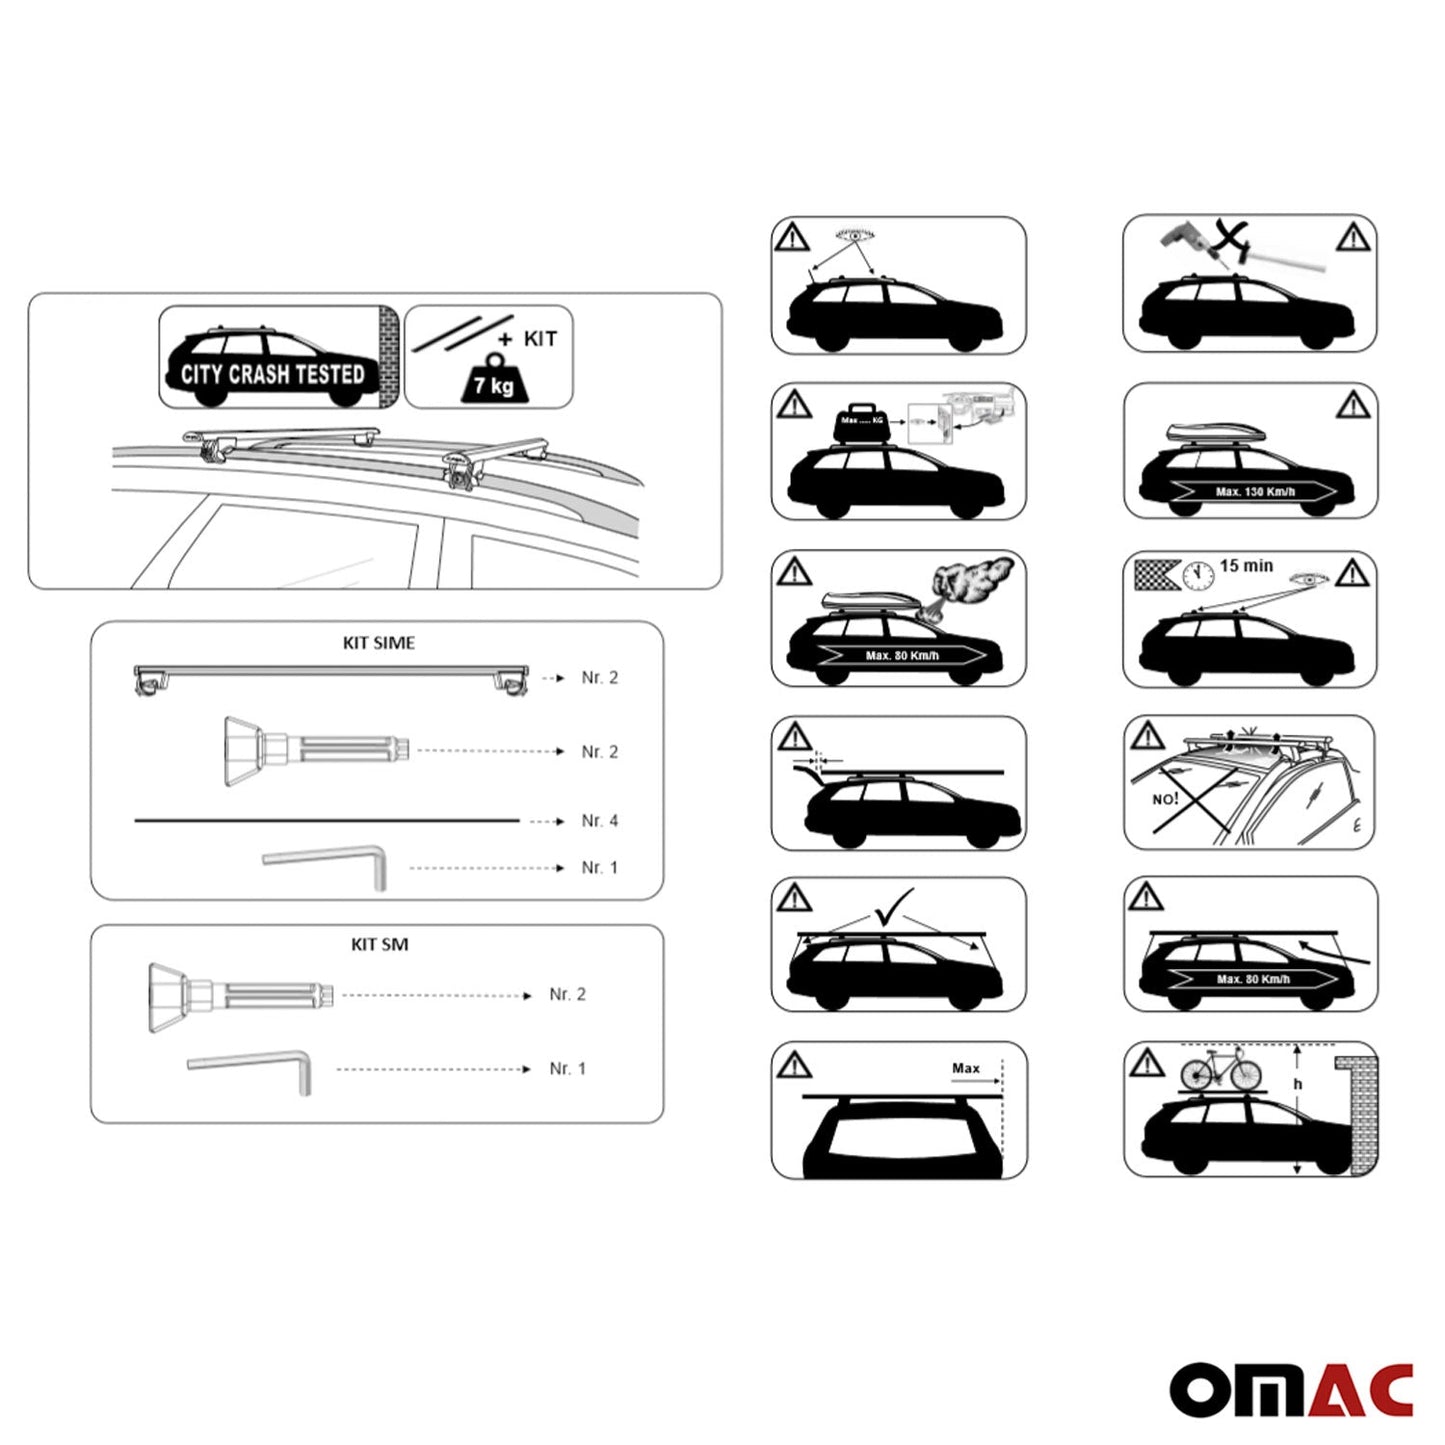 OMAC Roof Rack Cross Bars Lockable for Ford Grand C-Max 2012-2018 Gray 2Pcs U003892